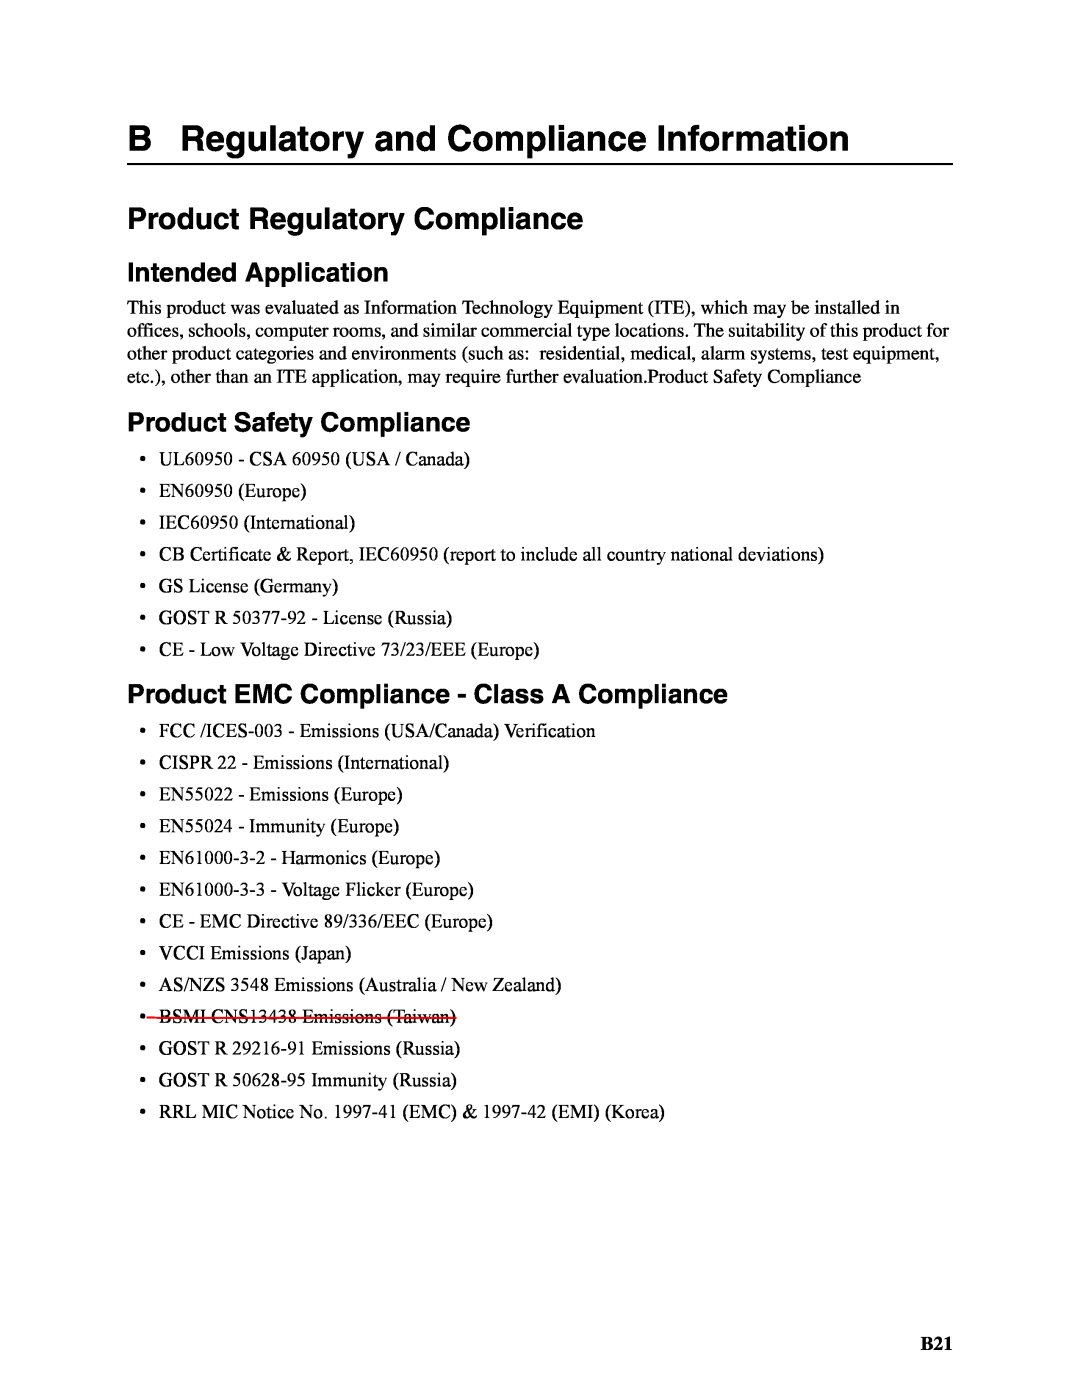 Intel SEBFCM4 manual B Regulatory and Compliance Information, Product Regulatory Compliance, Intended Application 